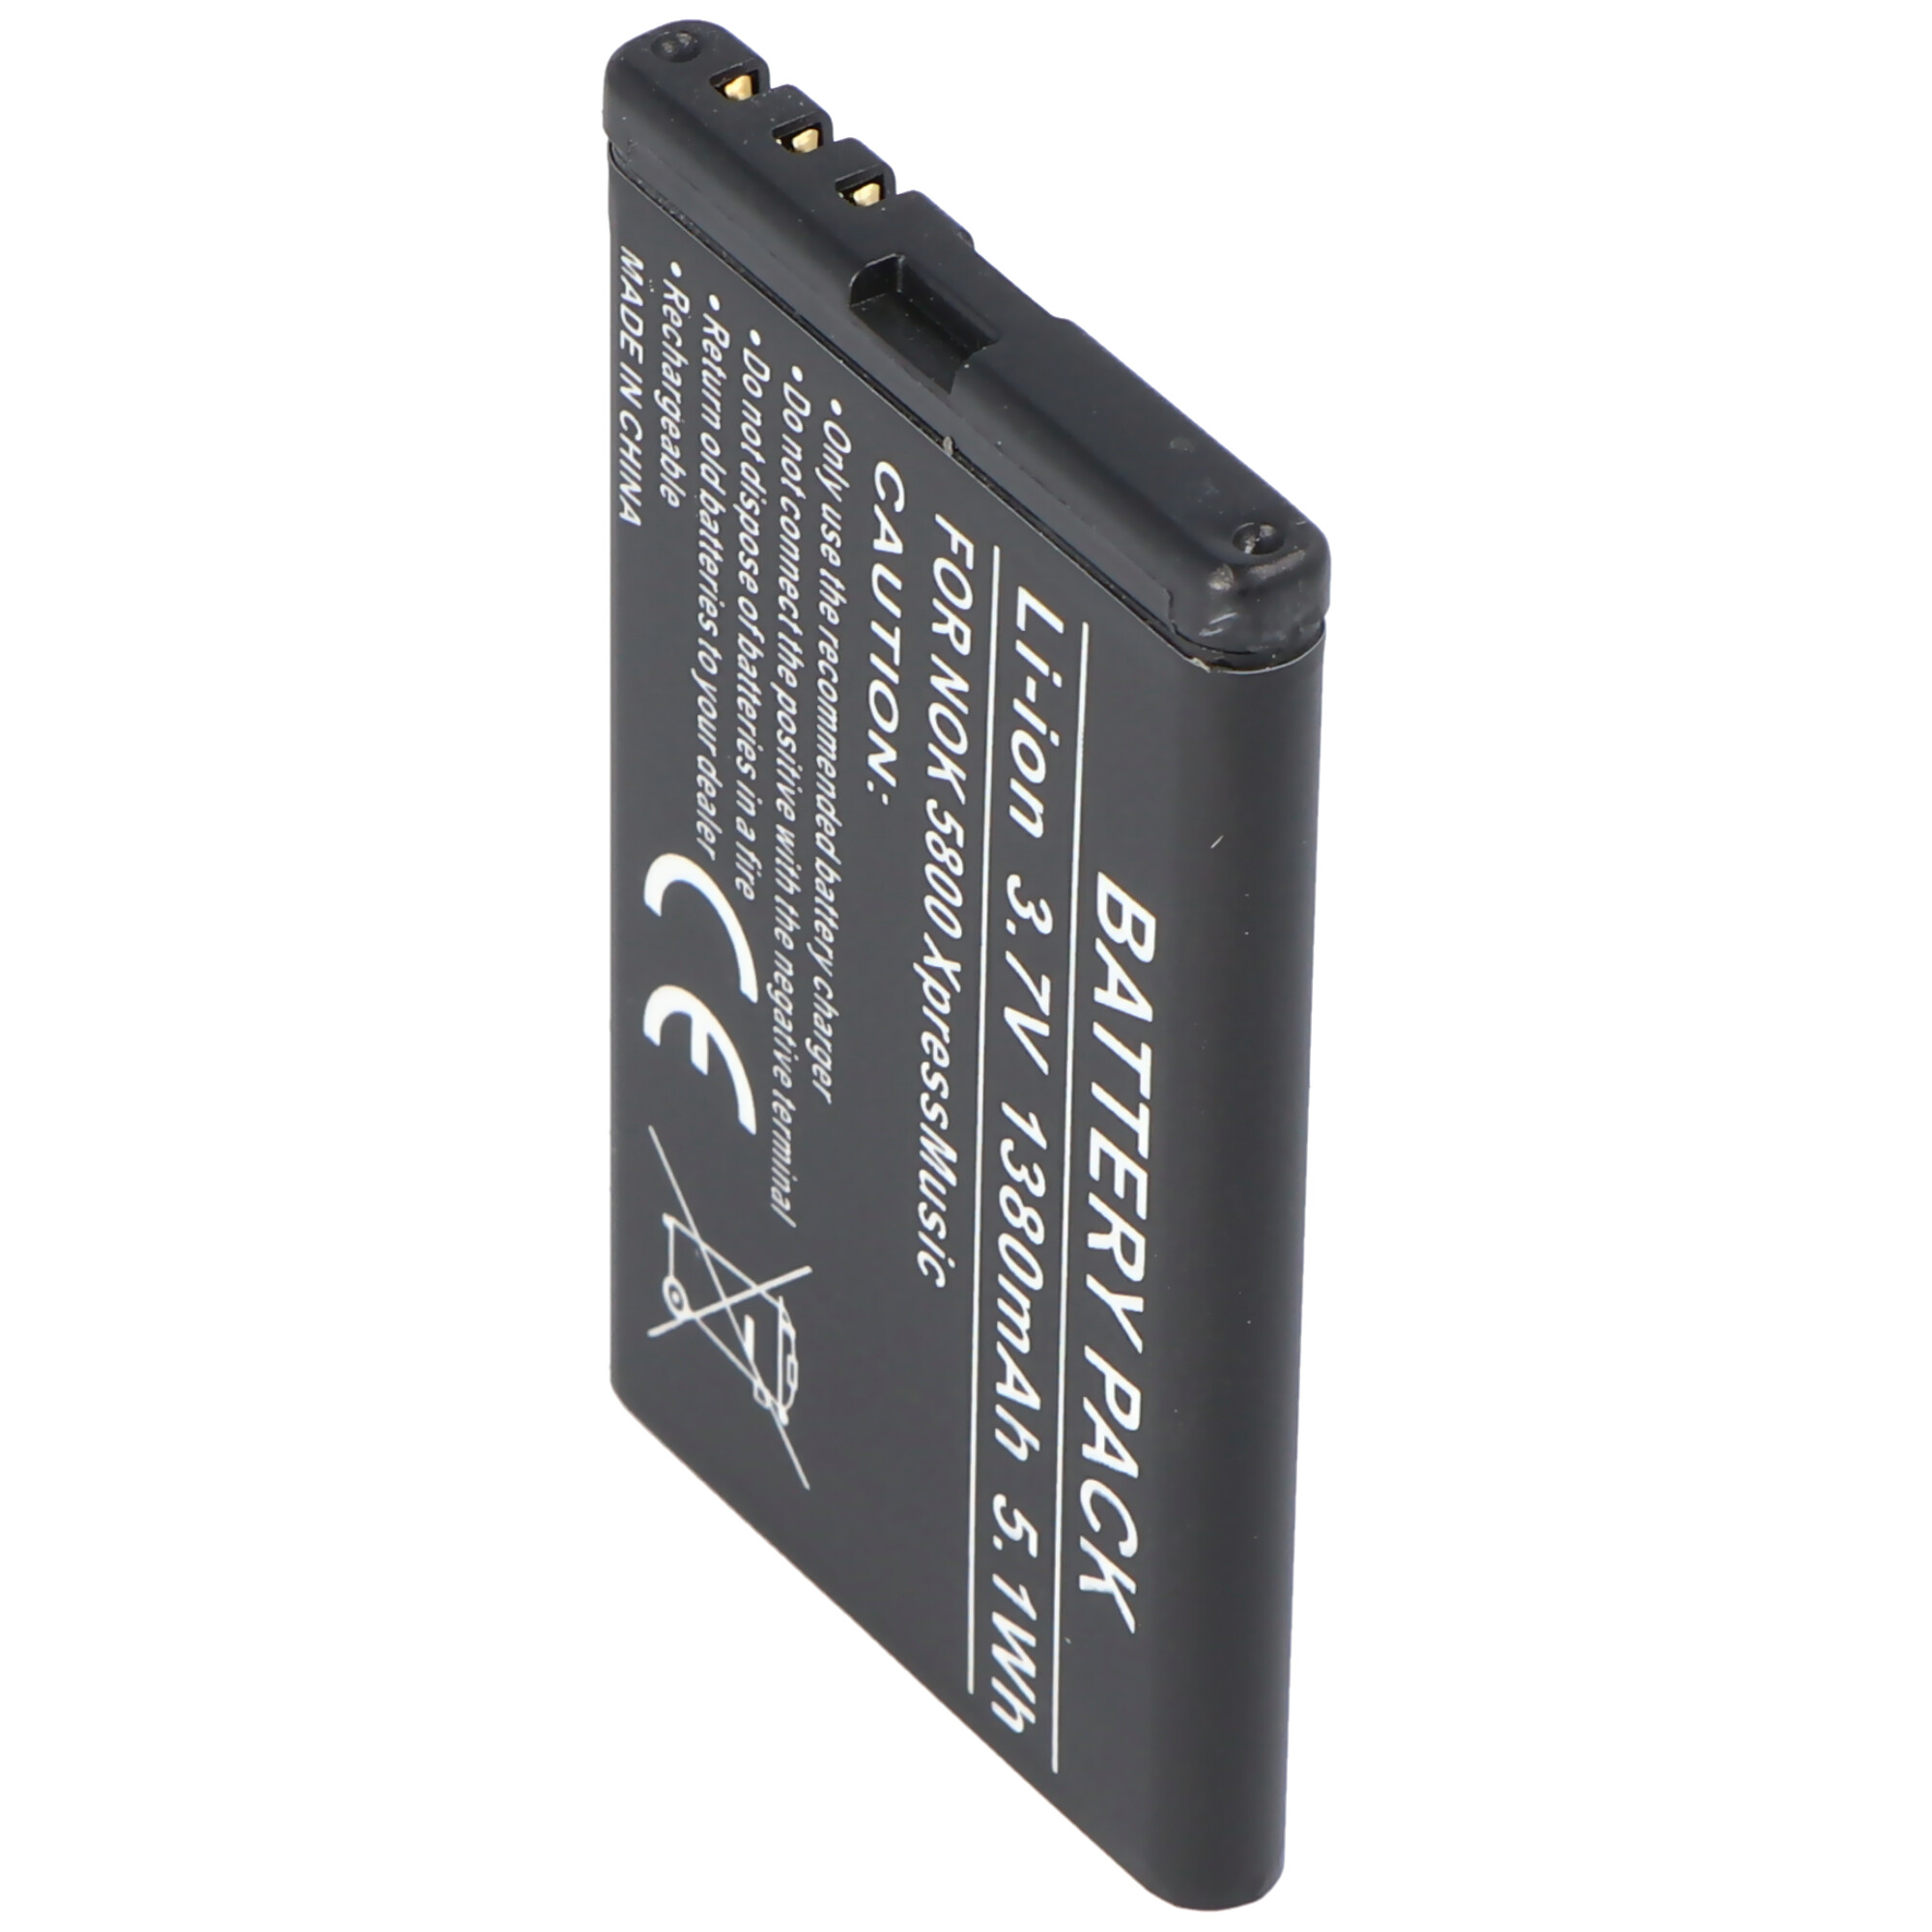 8,36 Wh. Batterie Compatible pour Smartphone Gigaset GS160 Batterie V30145-K1310-X463 3,8 V 2200 mAh Max